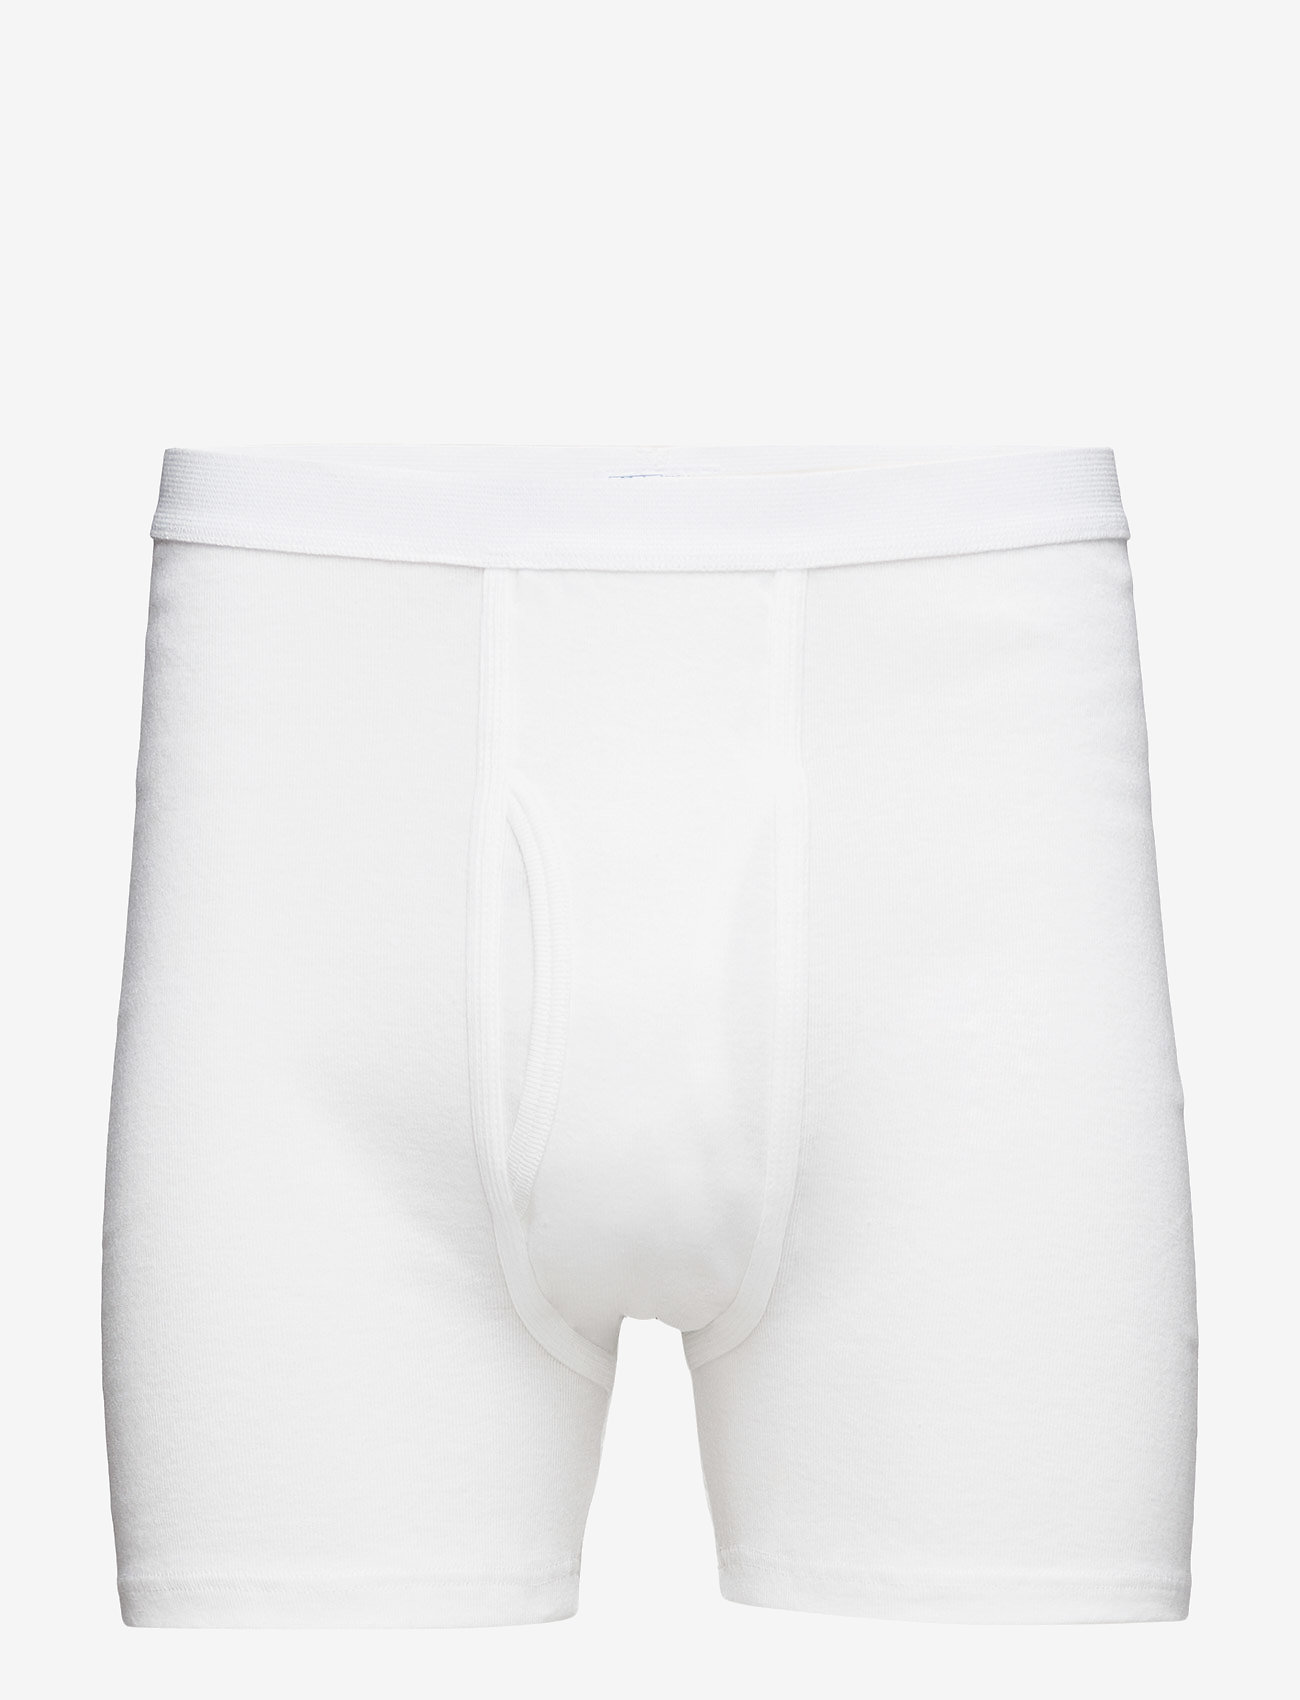 JBS - Original tights - trunks - white - 0